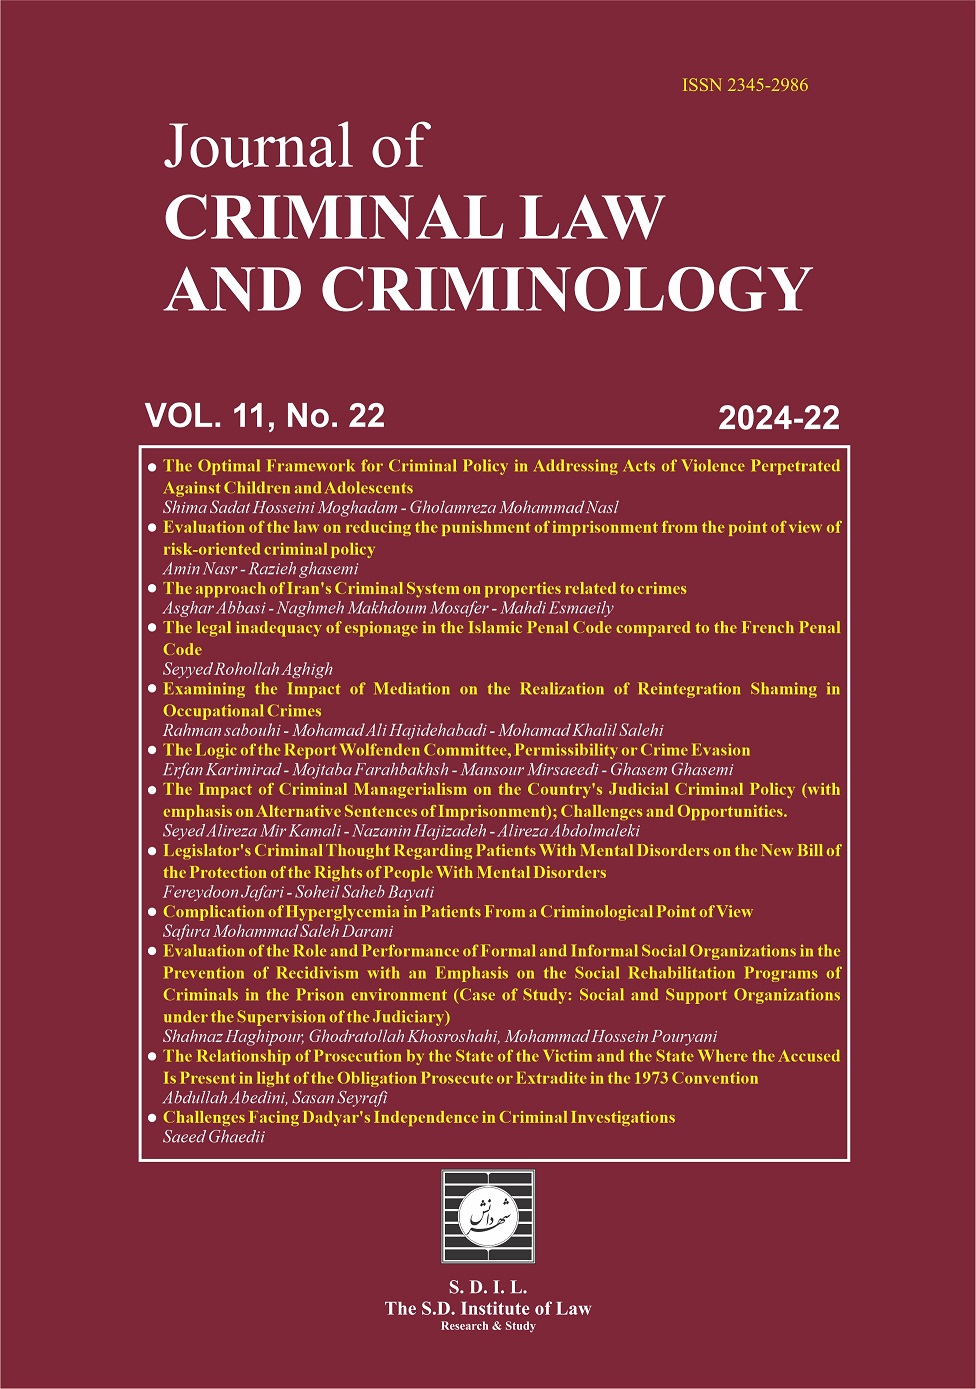 Journal of Criminal Law and Criminology